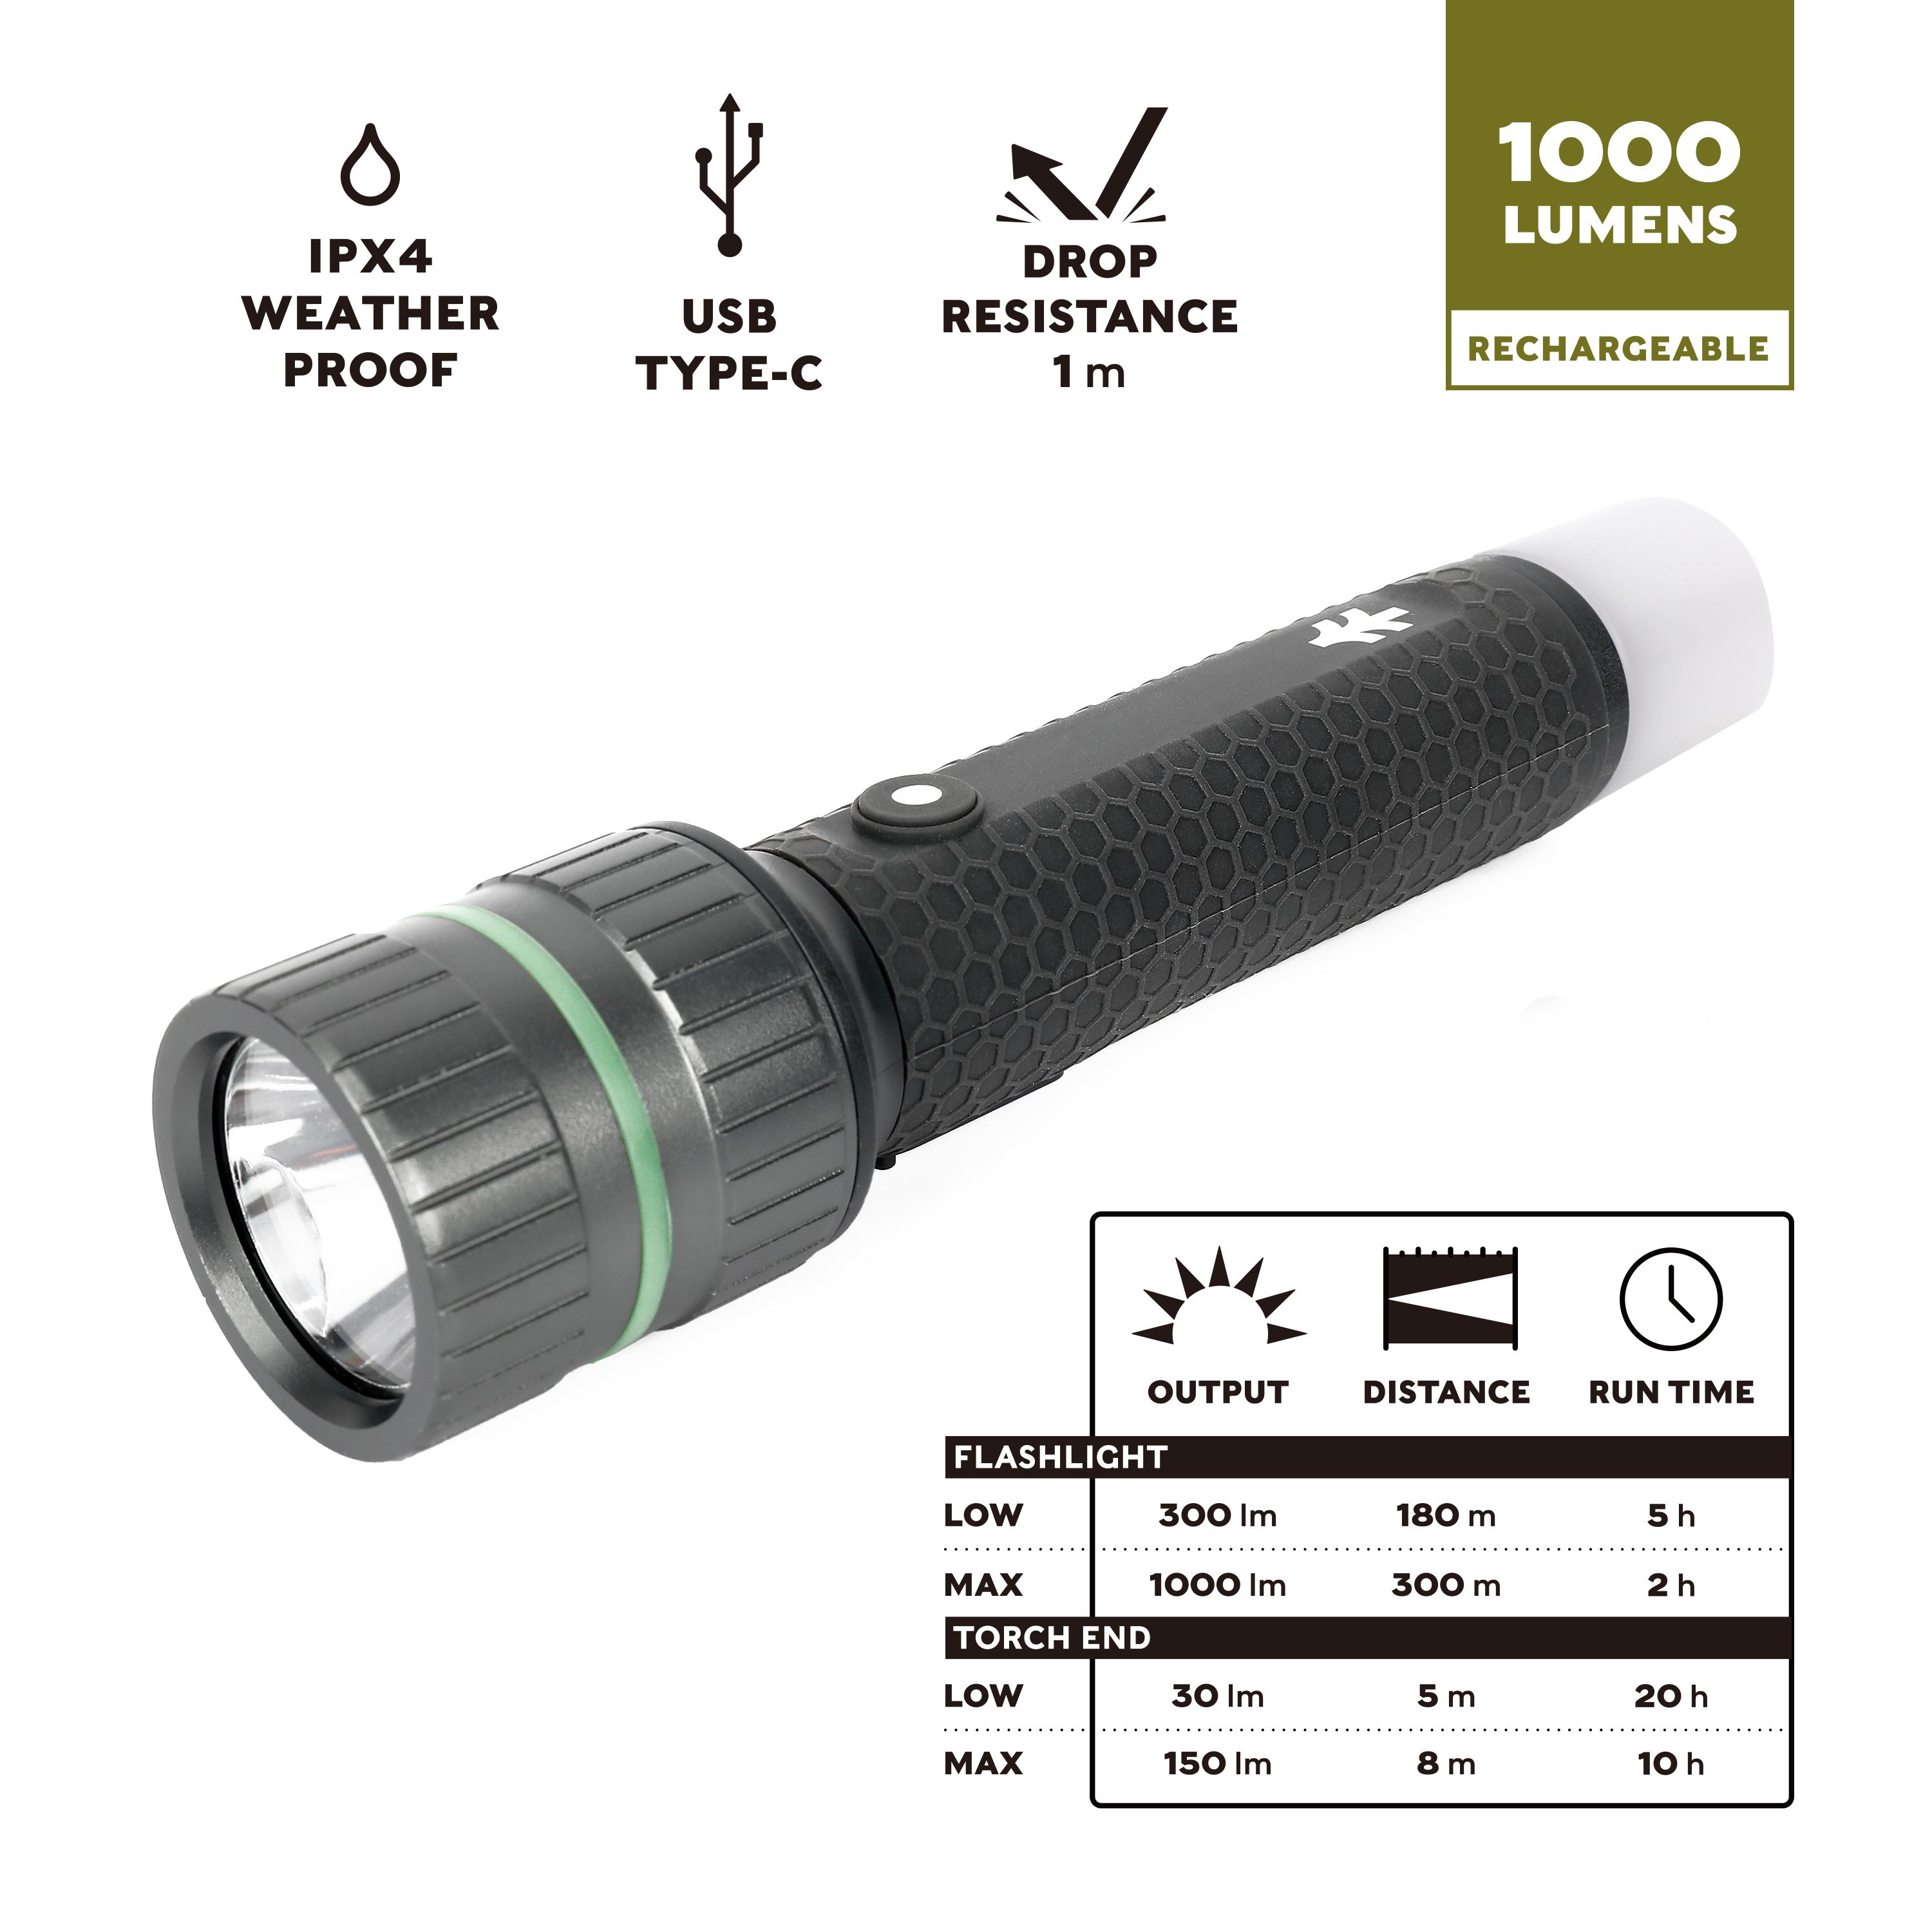 Swiss Tech 1000 Lumen LED Rechargeable Combo Flashlight, IPX4 Weatherproof, Drop Resistant - image 2 of 18